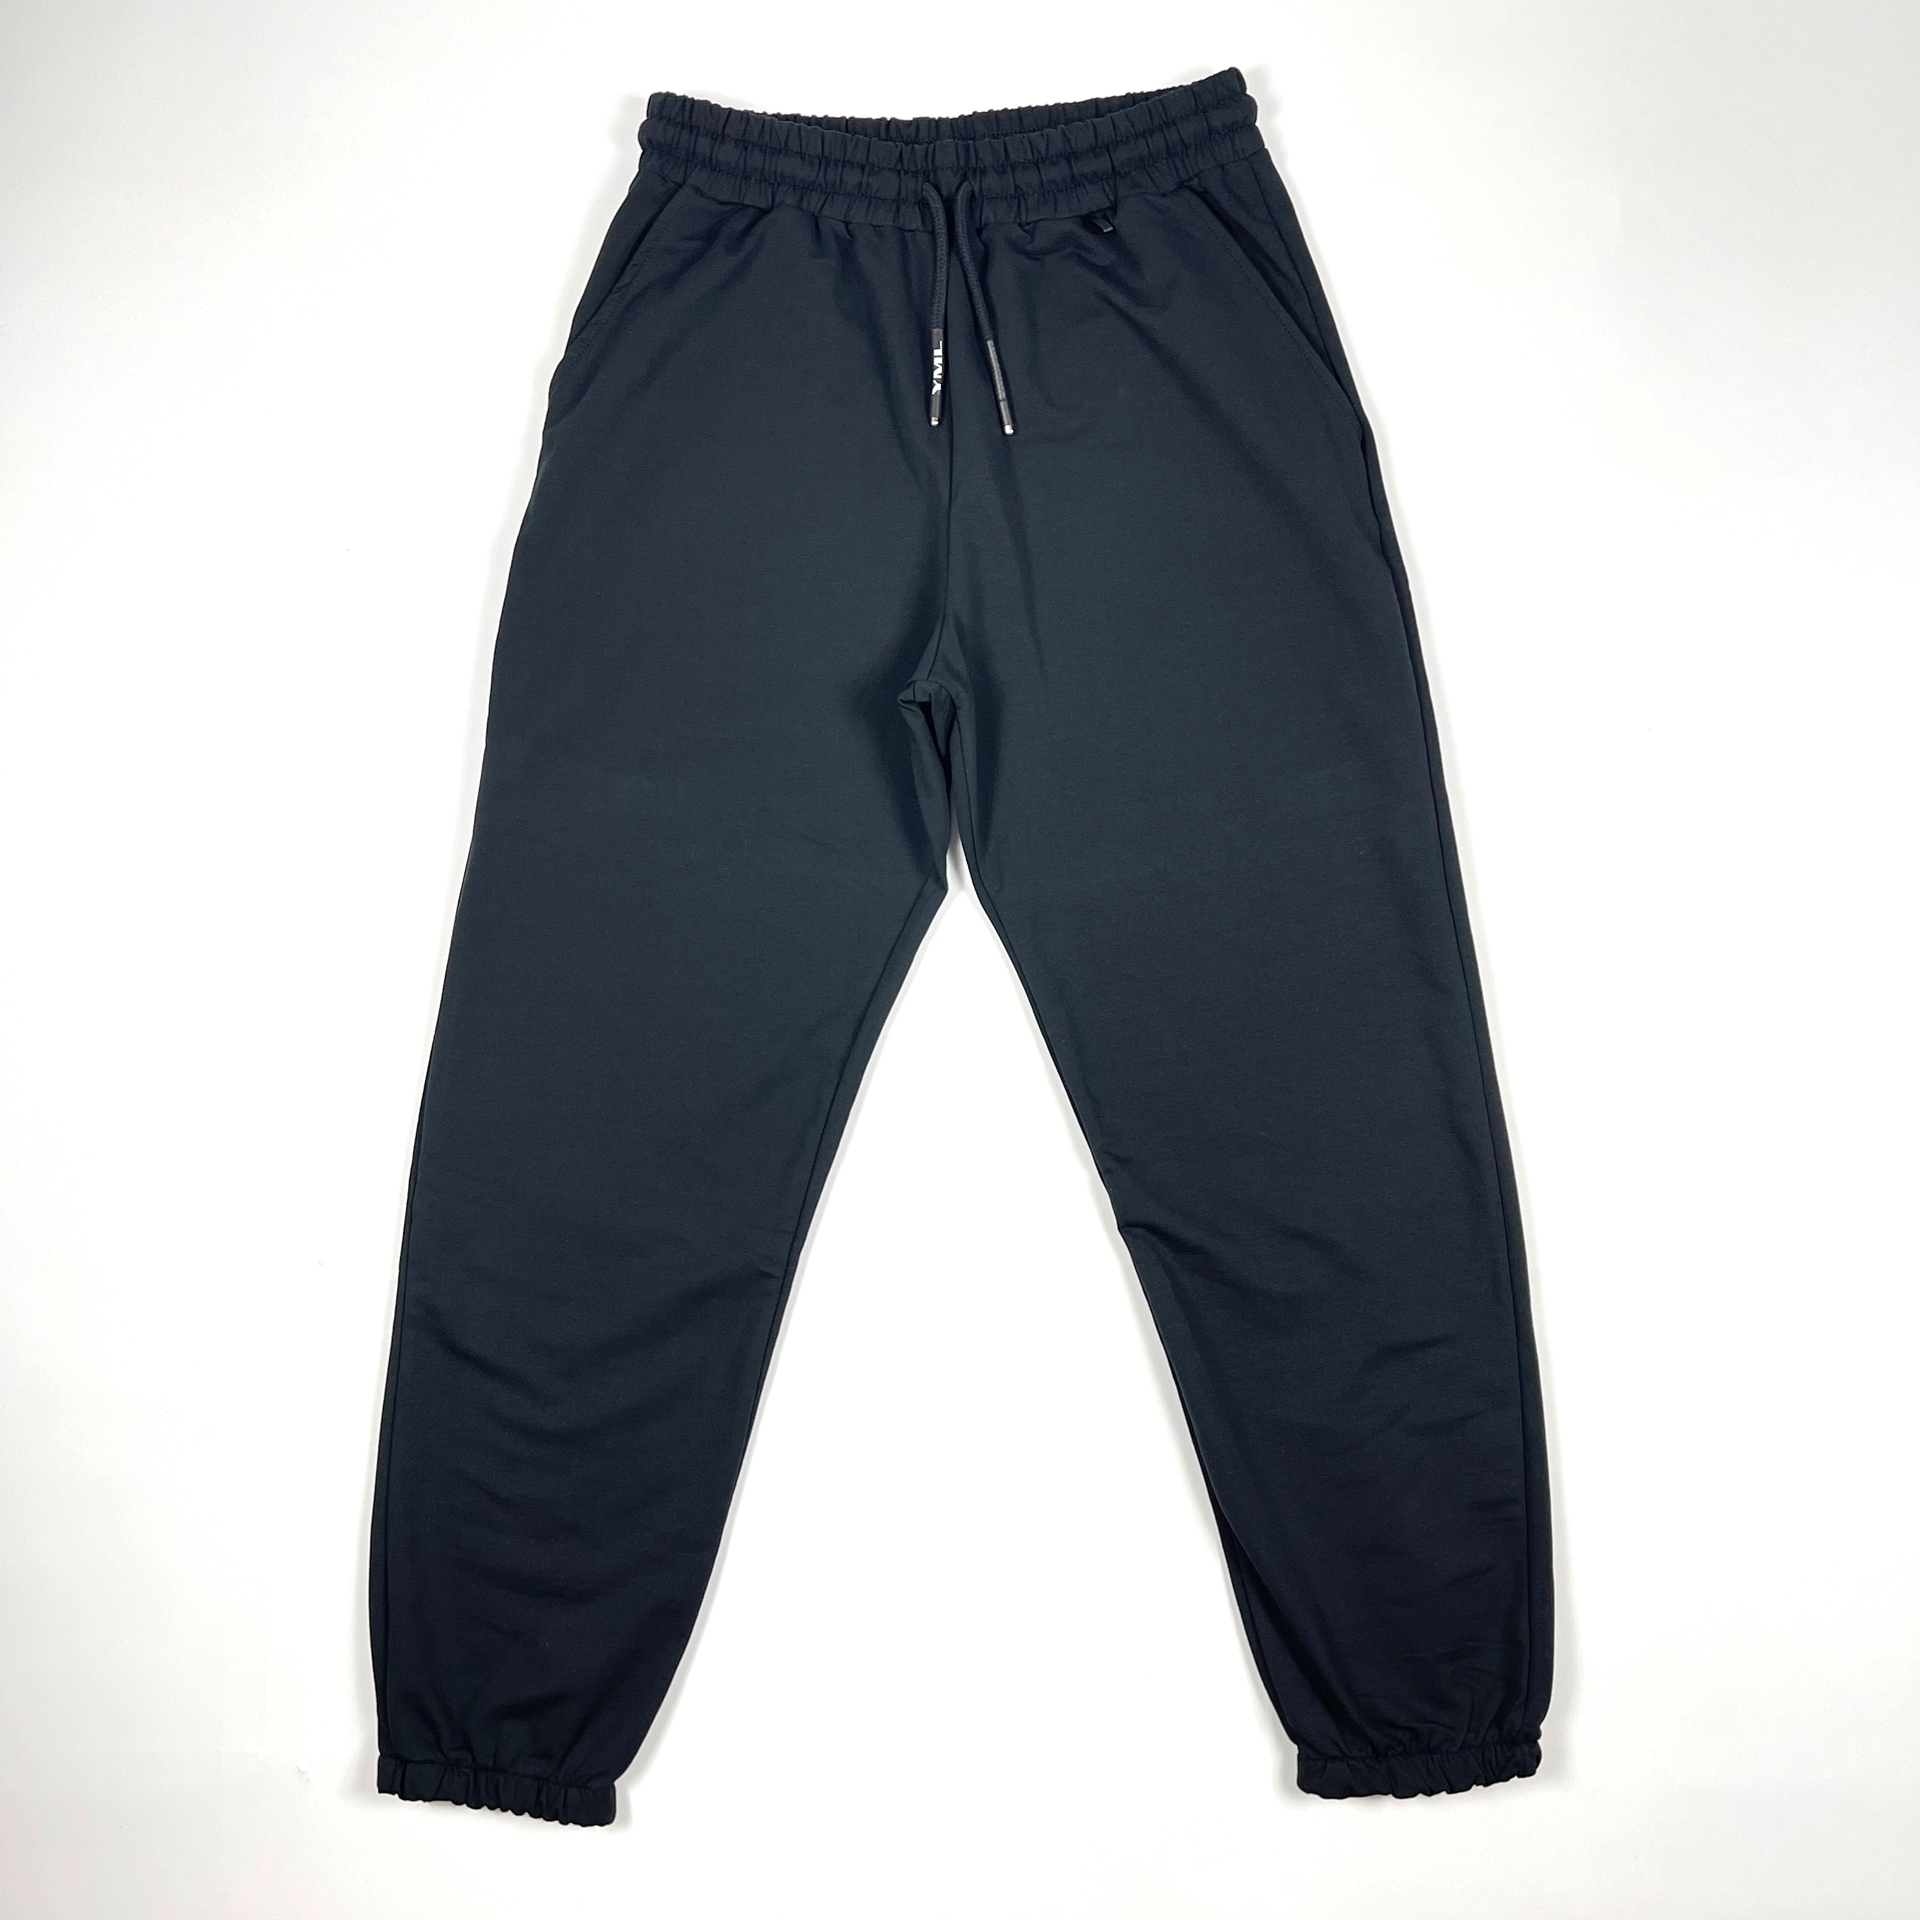 buy Unisex Sweatpants in Black and Gray Colors| Telepathy Qatar Online ...